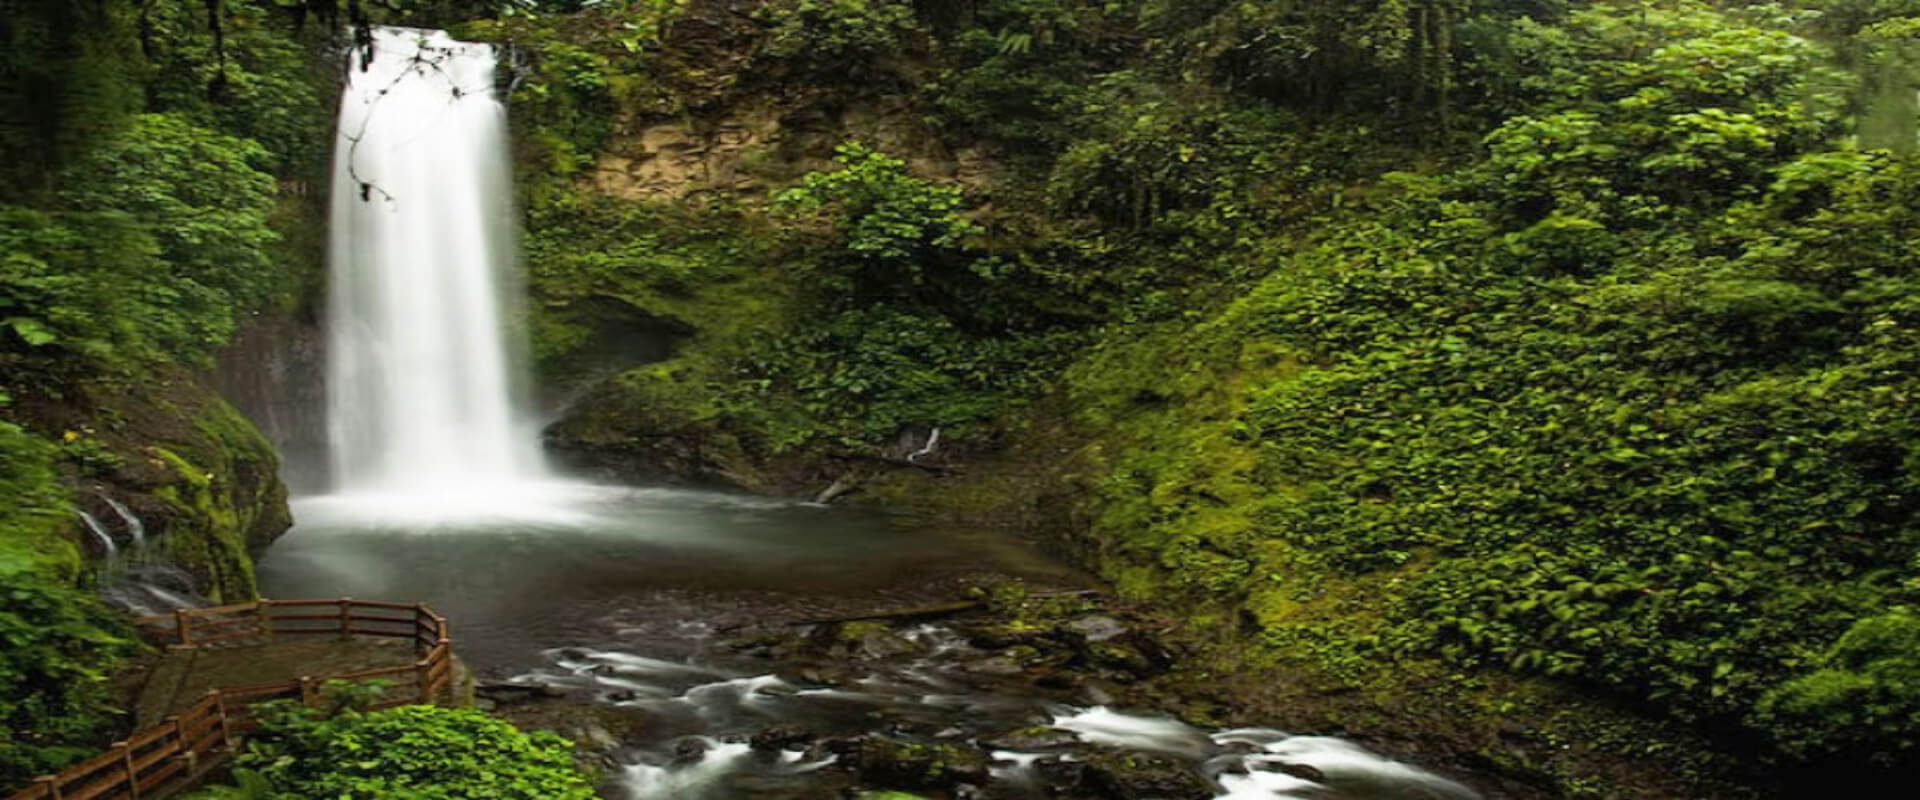 Combo Tour: Poás Volcano National Park / Doka Coffee Tour / La Paz Waterfall Garden | Costa Rica Jade Tours